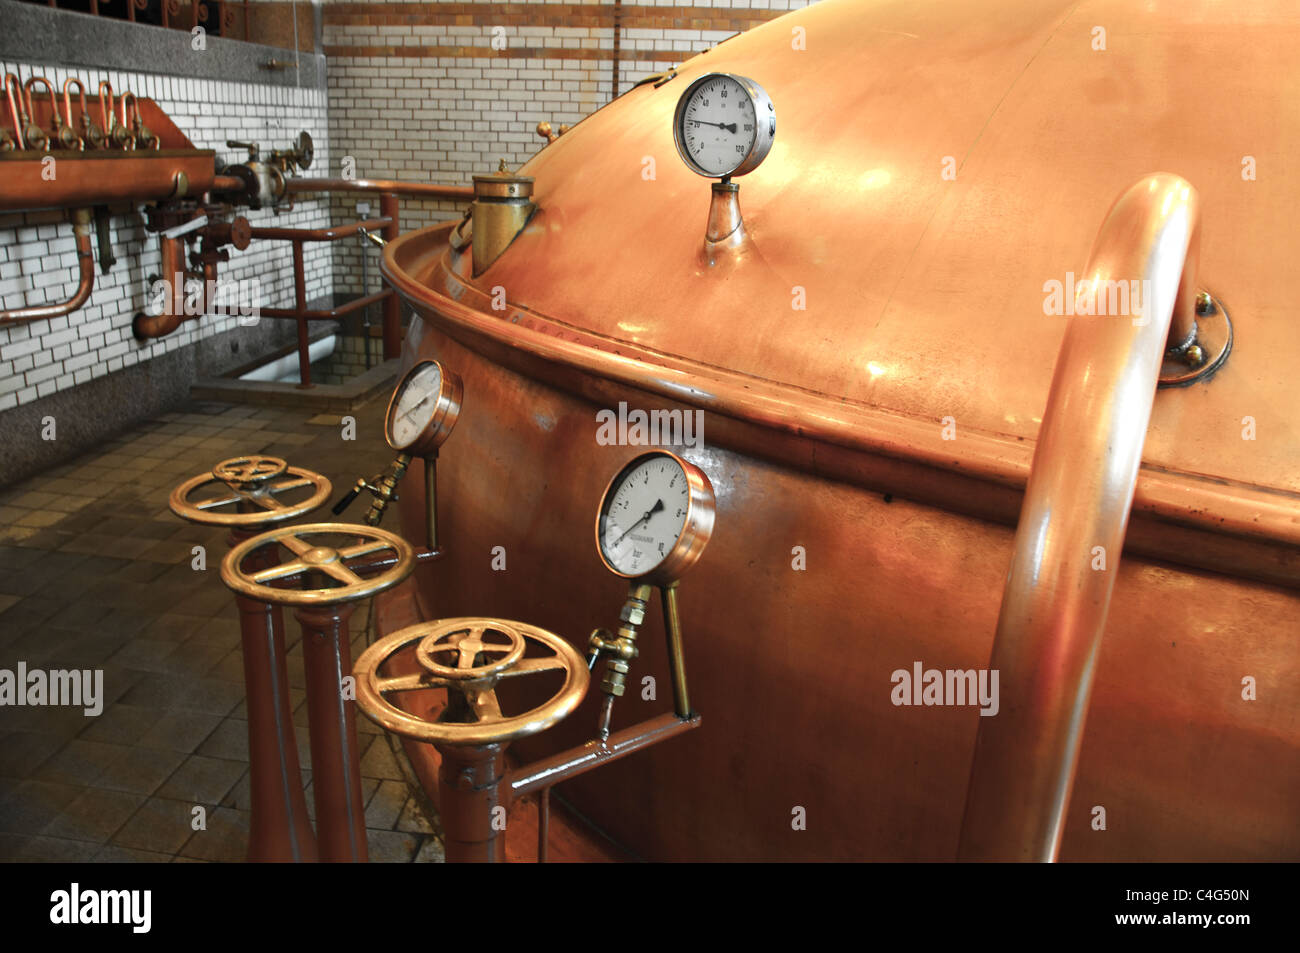 Industrielle Bier Braukessel Stockfoto